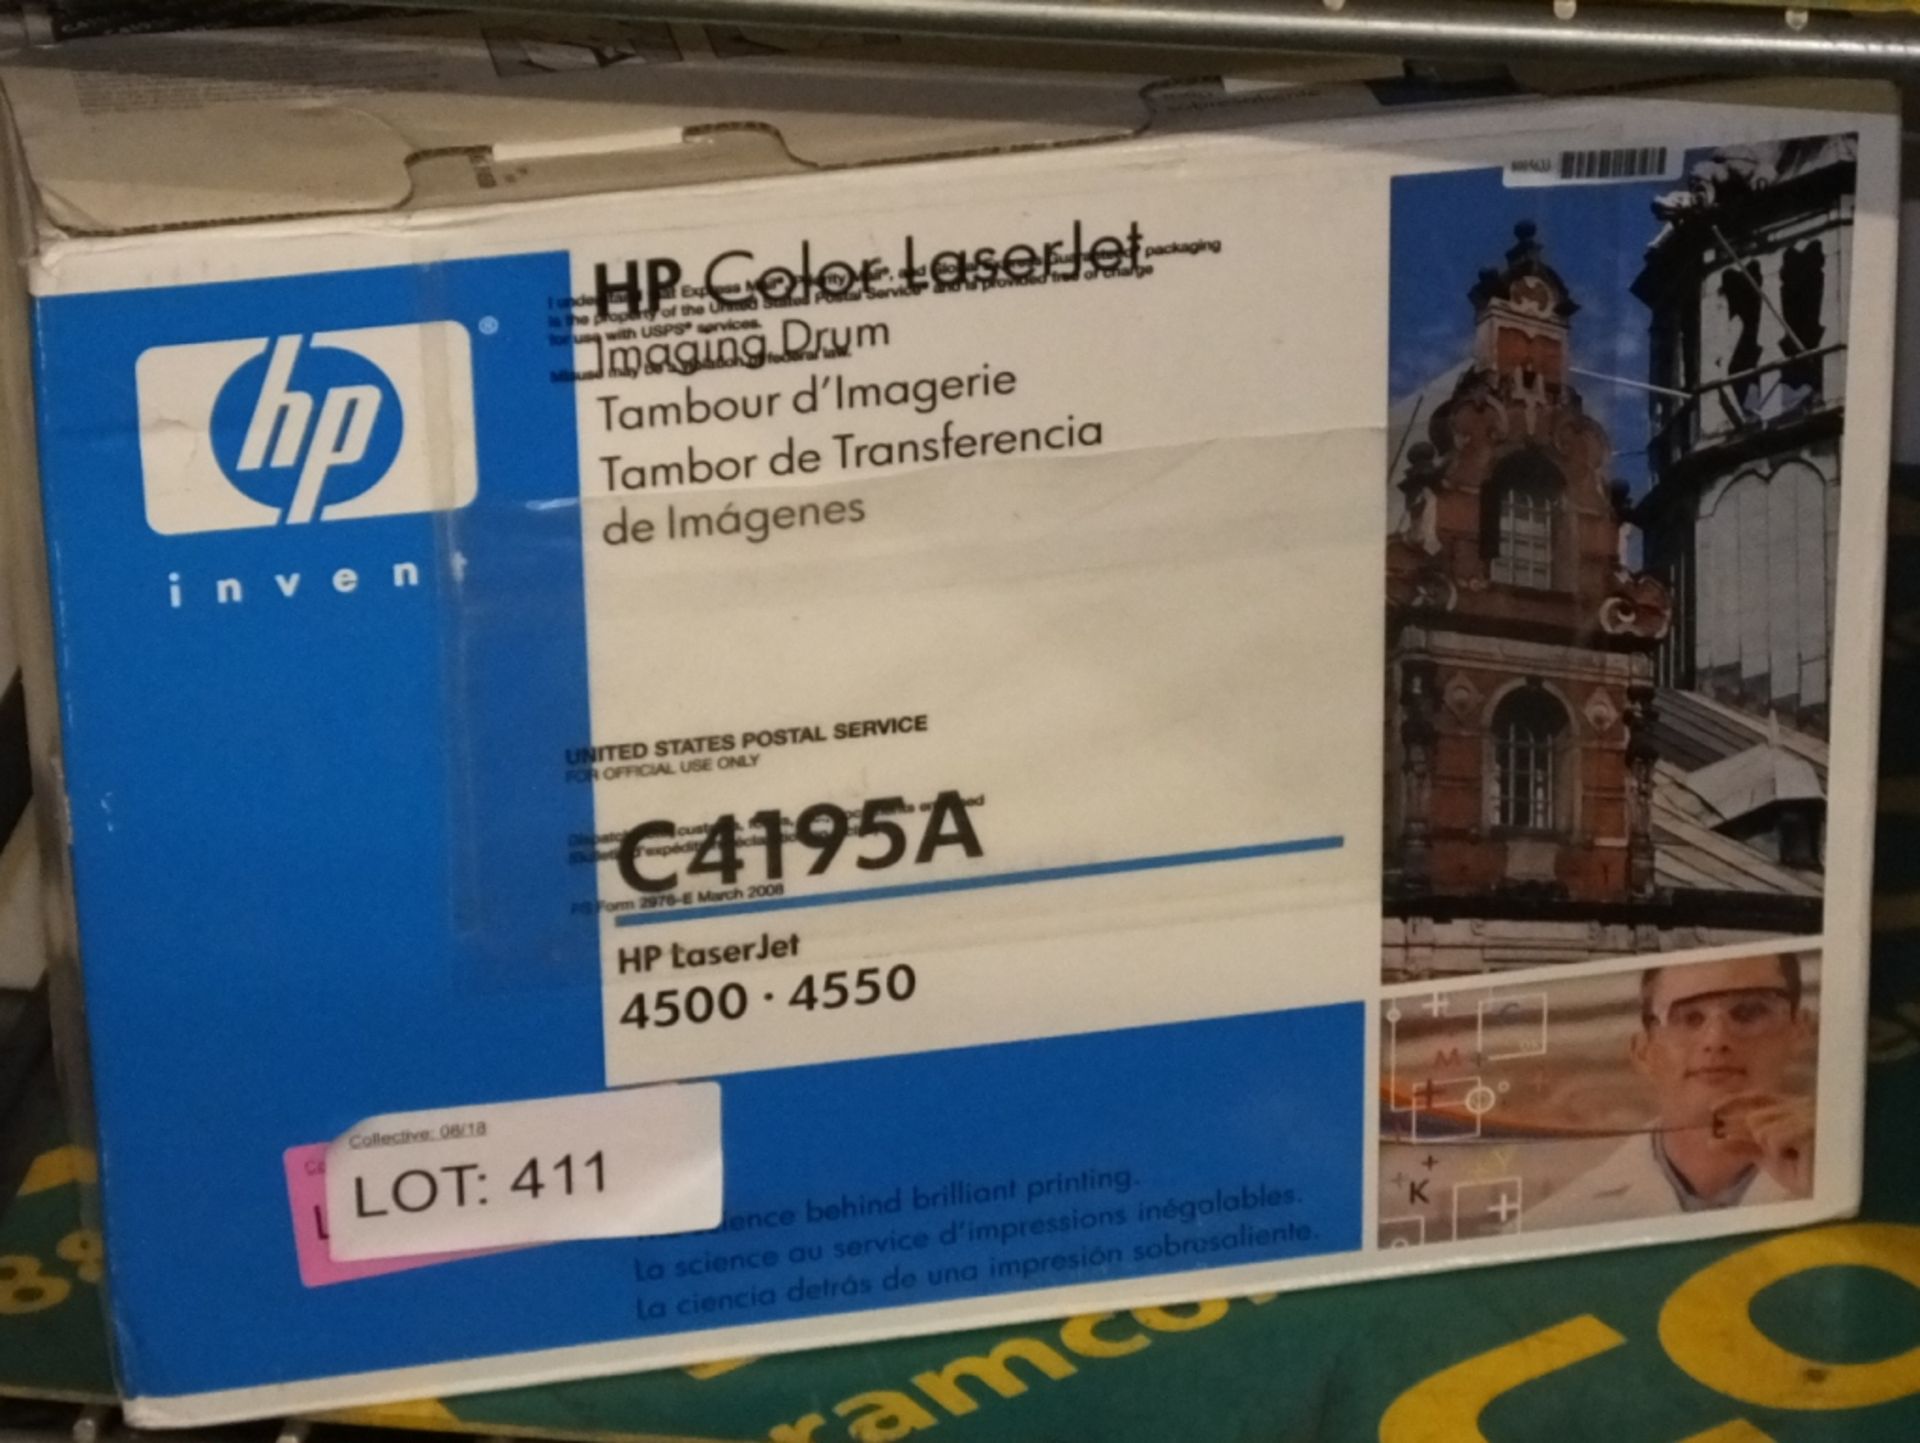 HP Color Laserjet Imaging Drum C4195A